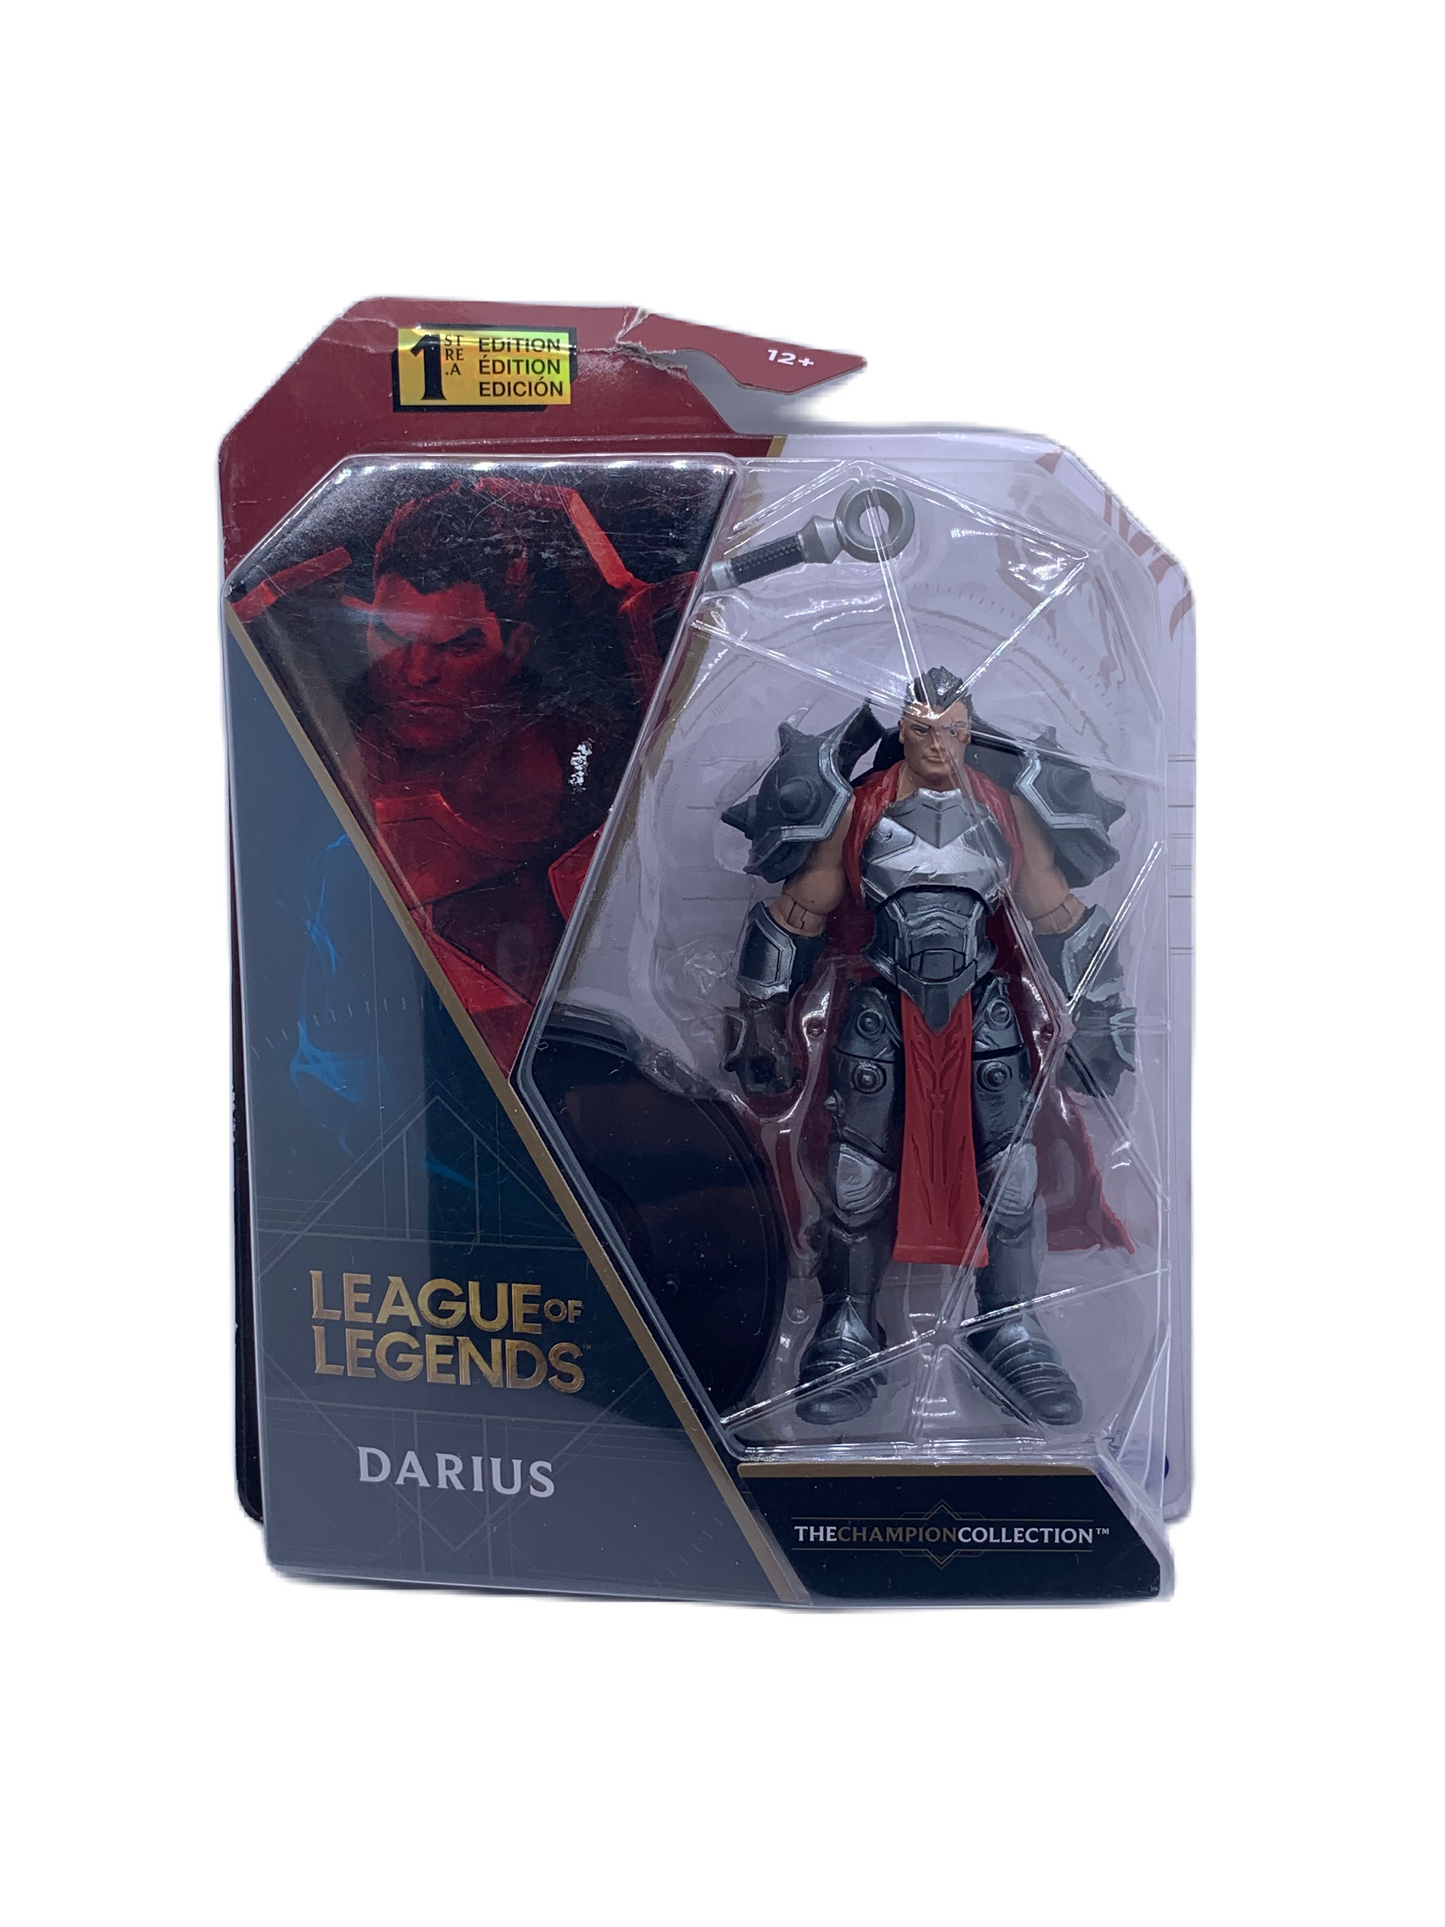 League of Legends The Champion Darius 1st Edition